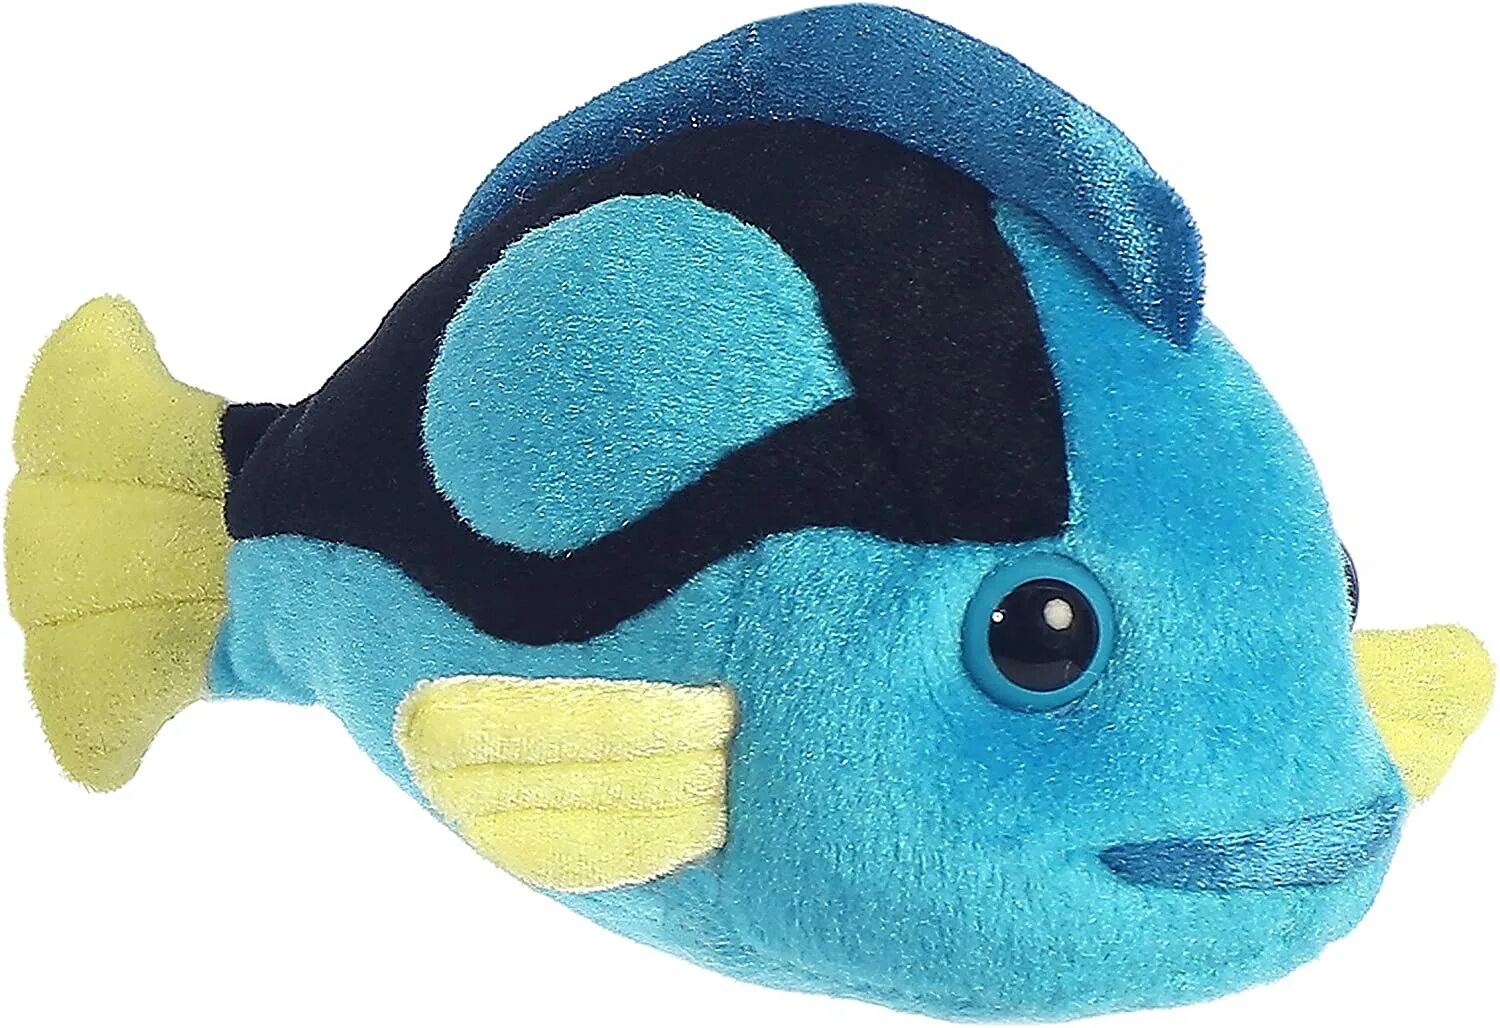 Мягкая игрушка рыба. Игрушка "рыбка". Синий рыба игрушка. Игрушки рыба Фиш мягкие. Купить игрушку рыбки